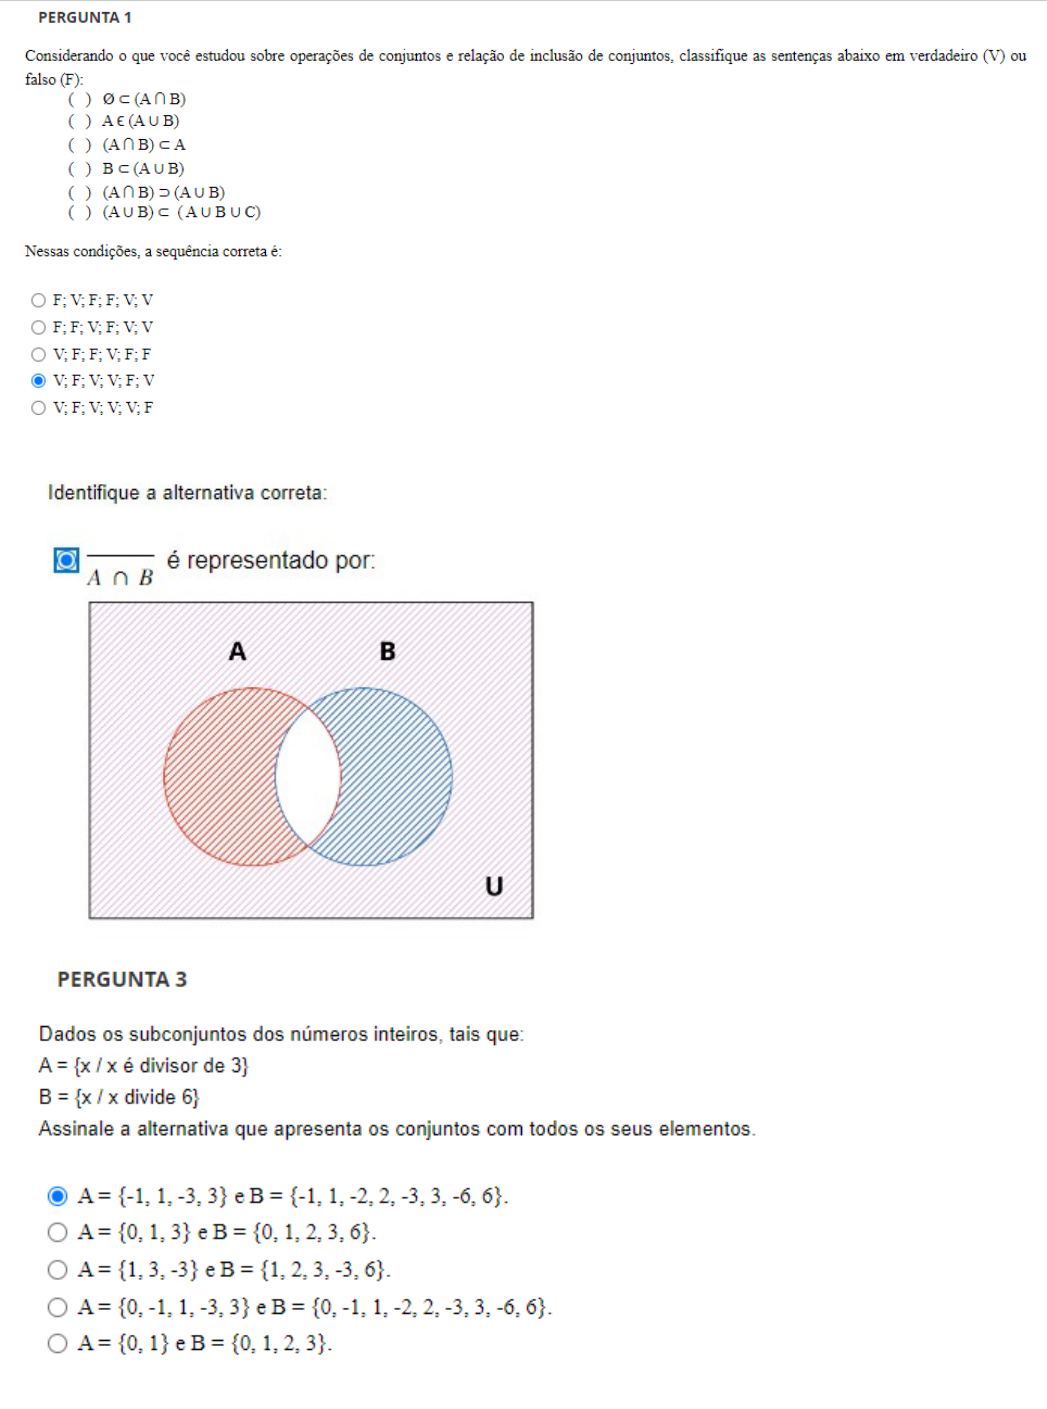 UNIVESP - Semana 1 - Quiz Objeto Educacional - Matemática Básica - Matemática  Básica